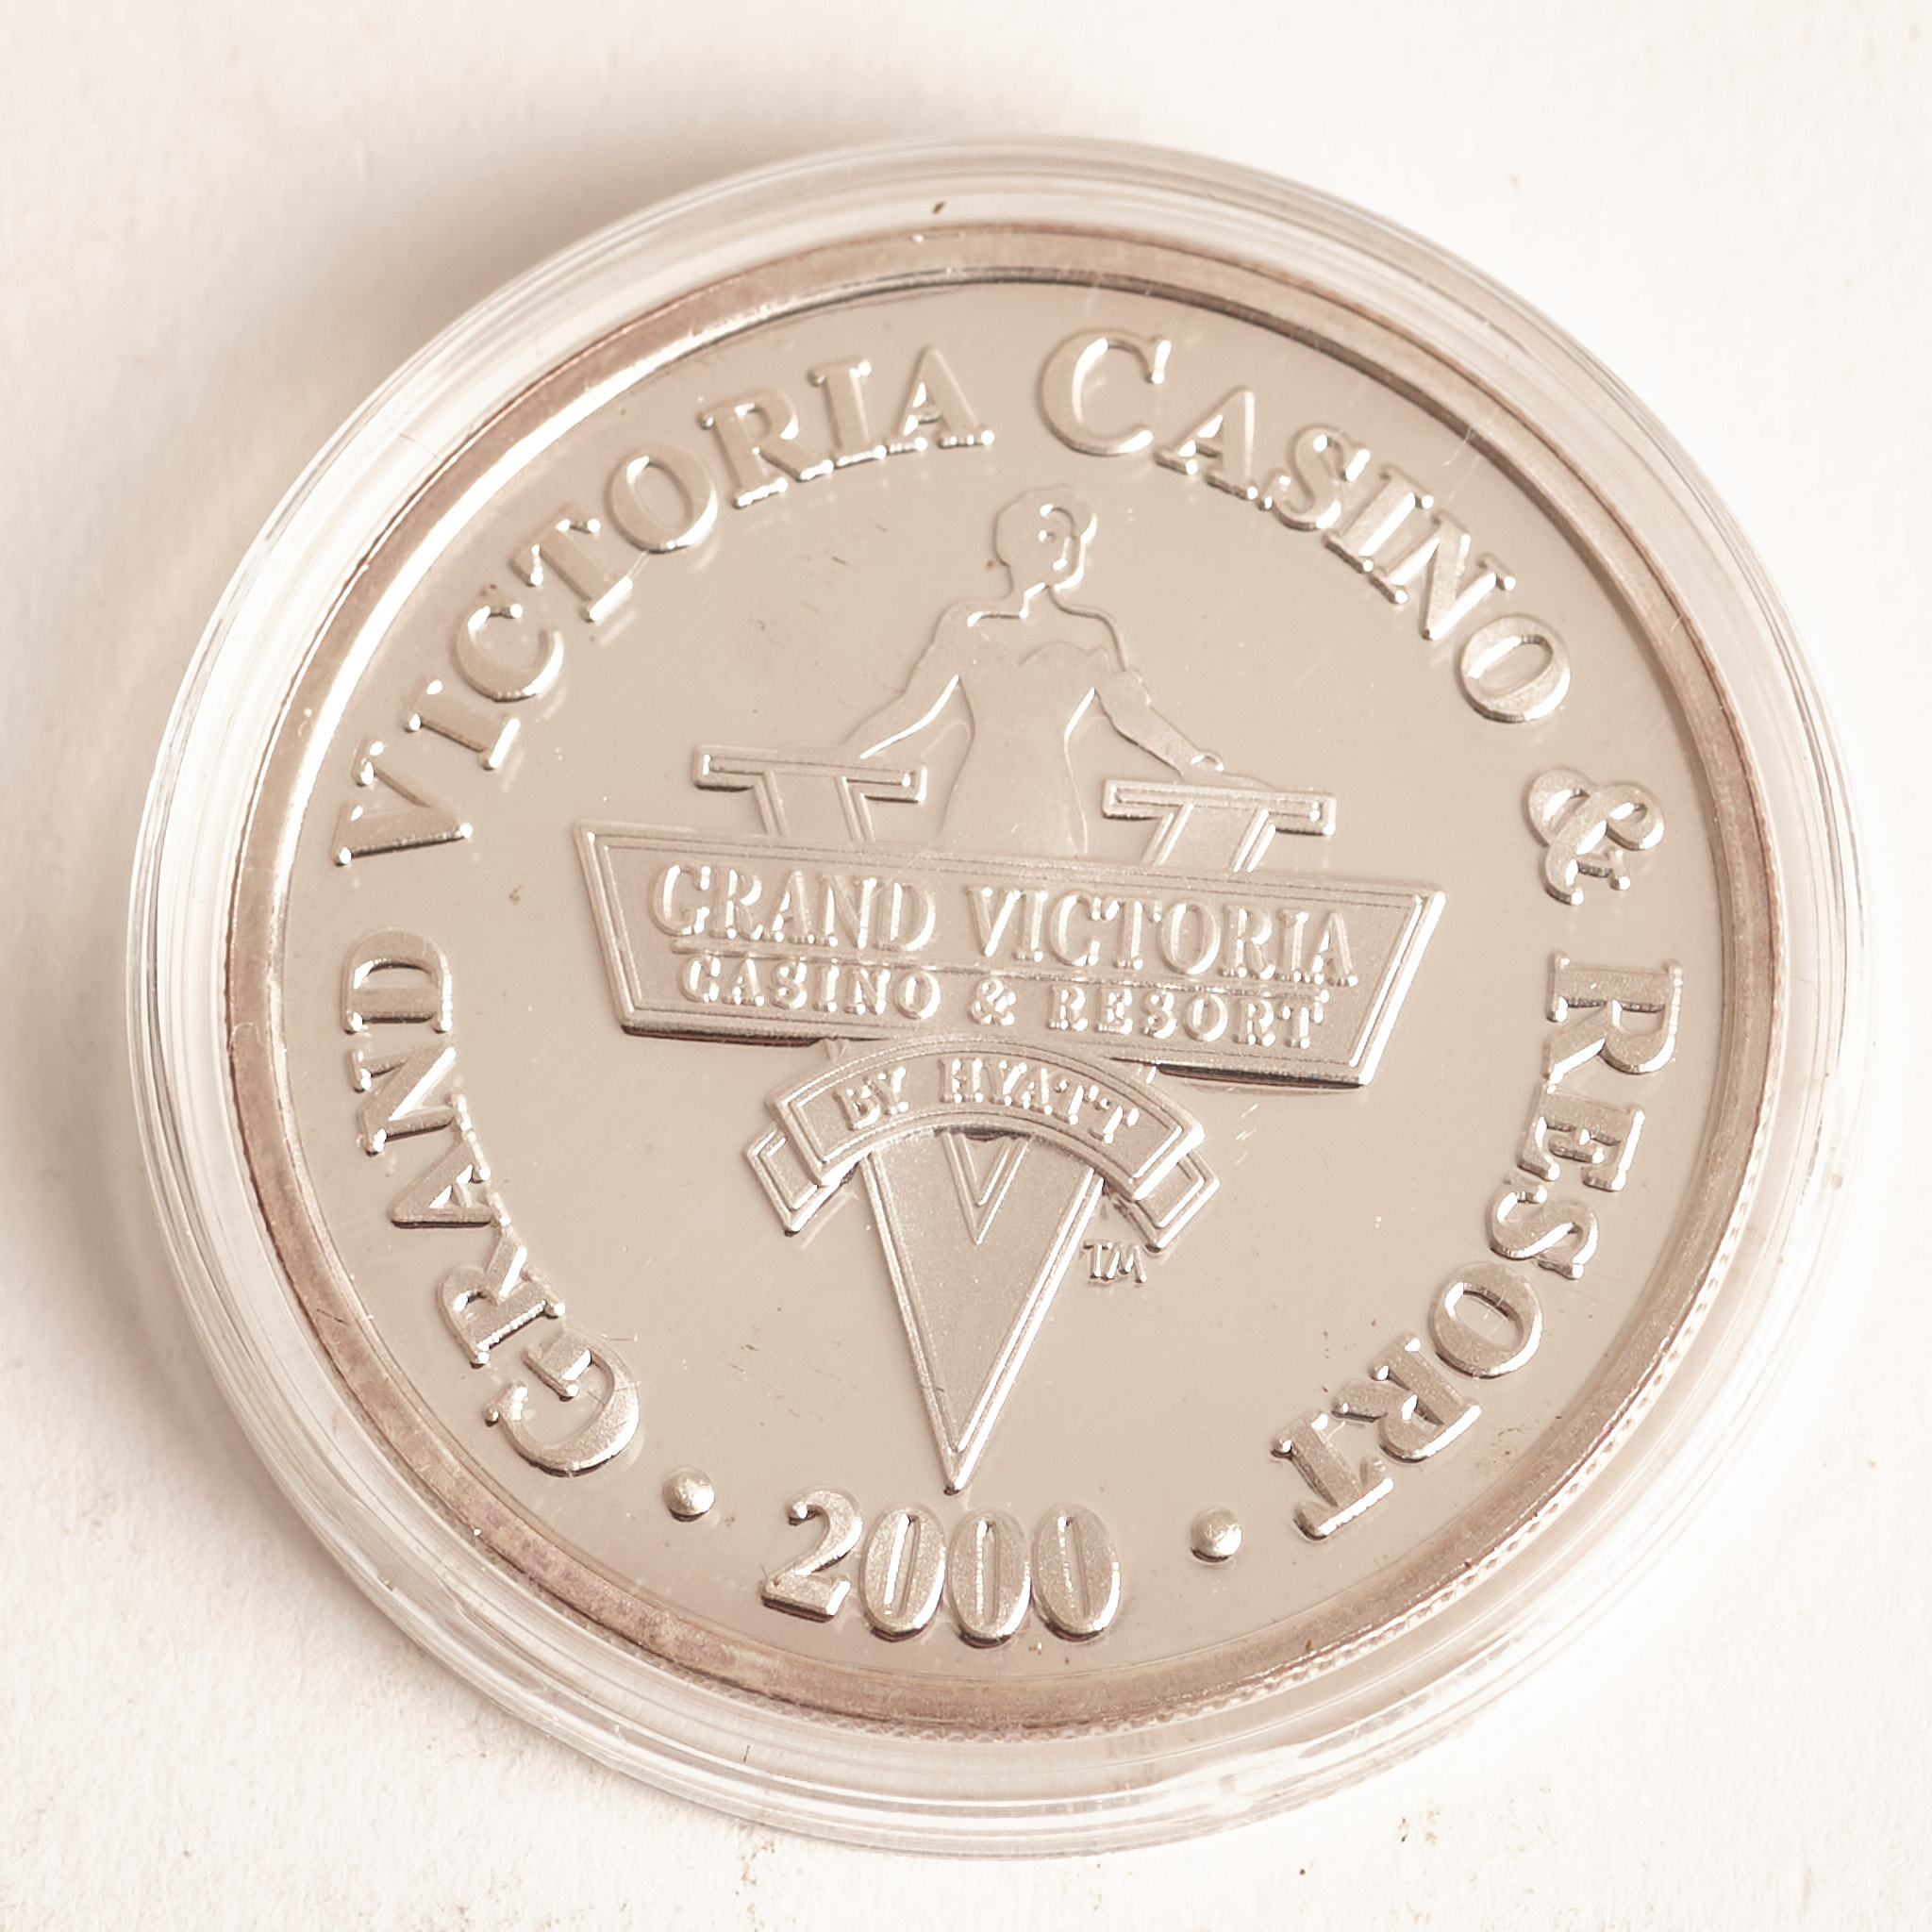 GRAND VICTORIA CASINO BY HYATT, 2000, THE DAWN OF… A NEW MILLENIUM, .999 SILVER, Poker Card Guard